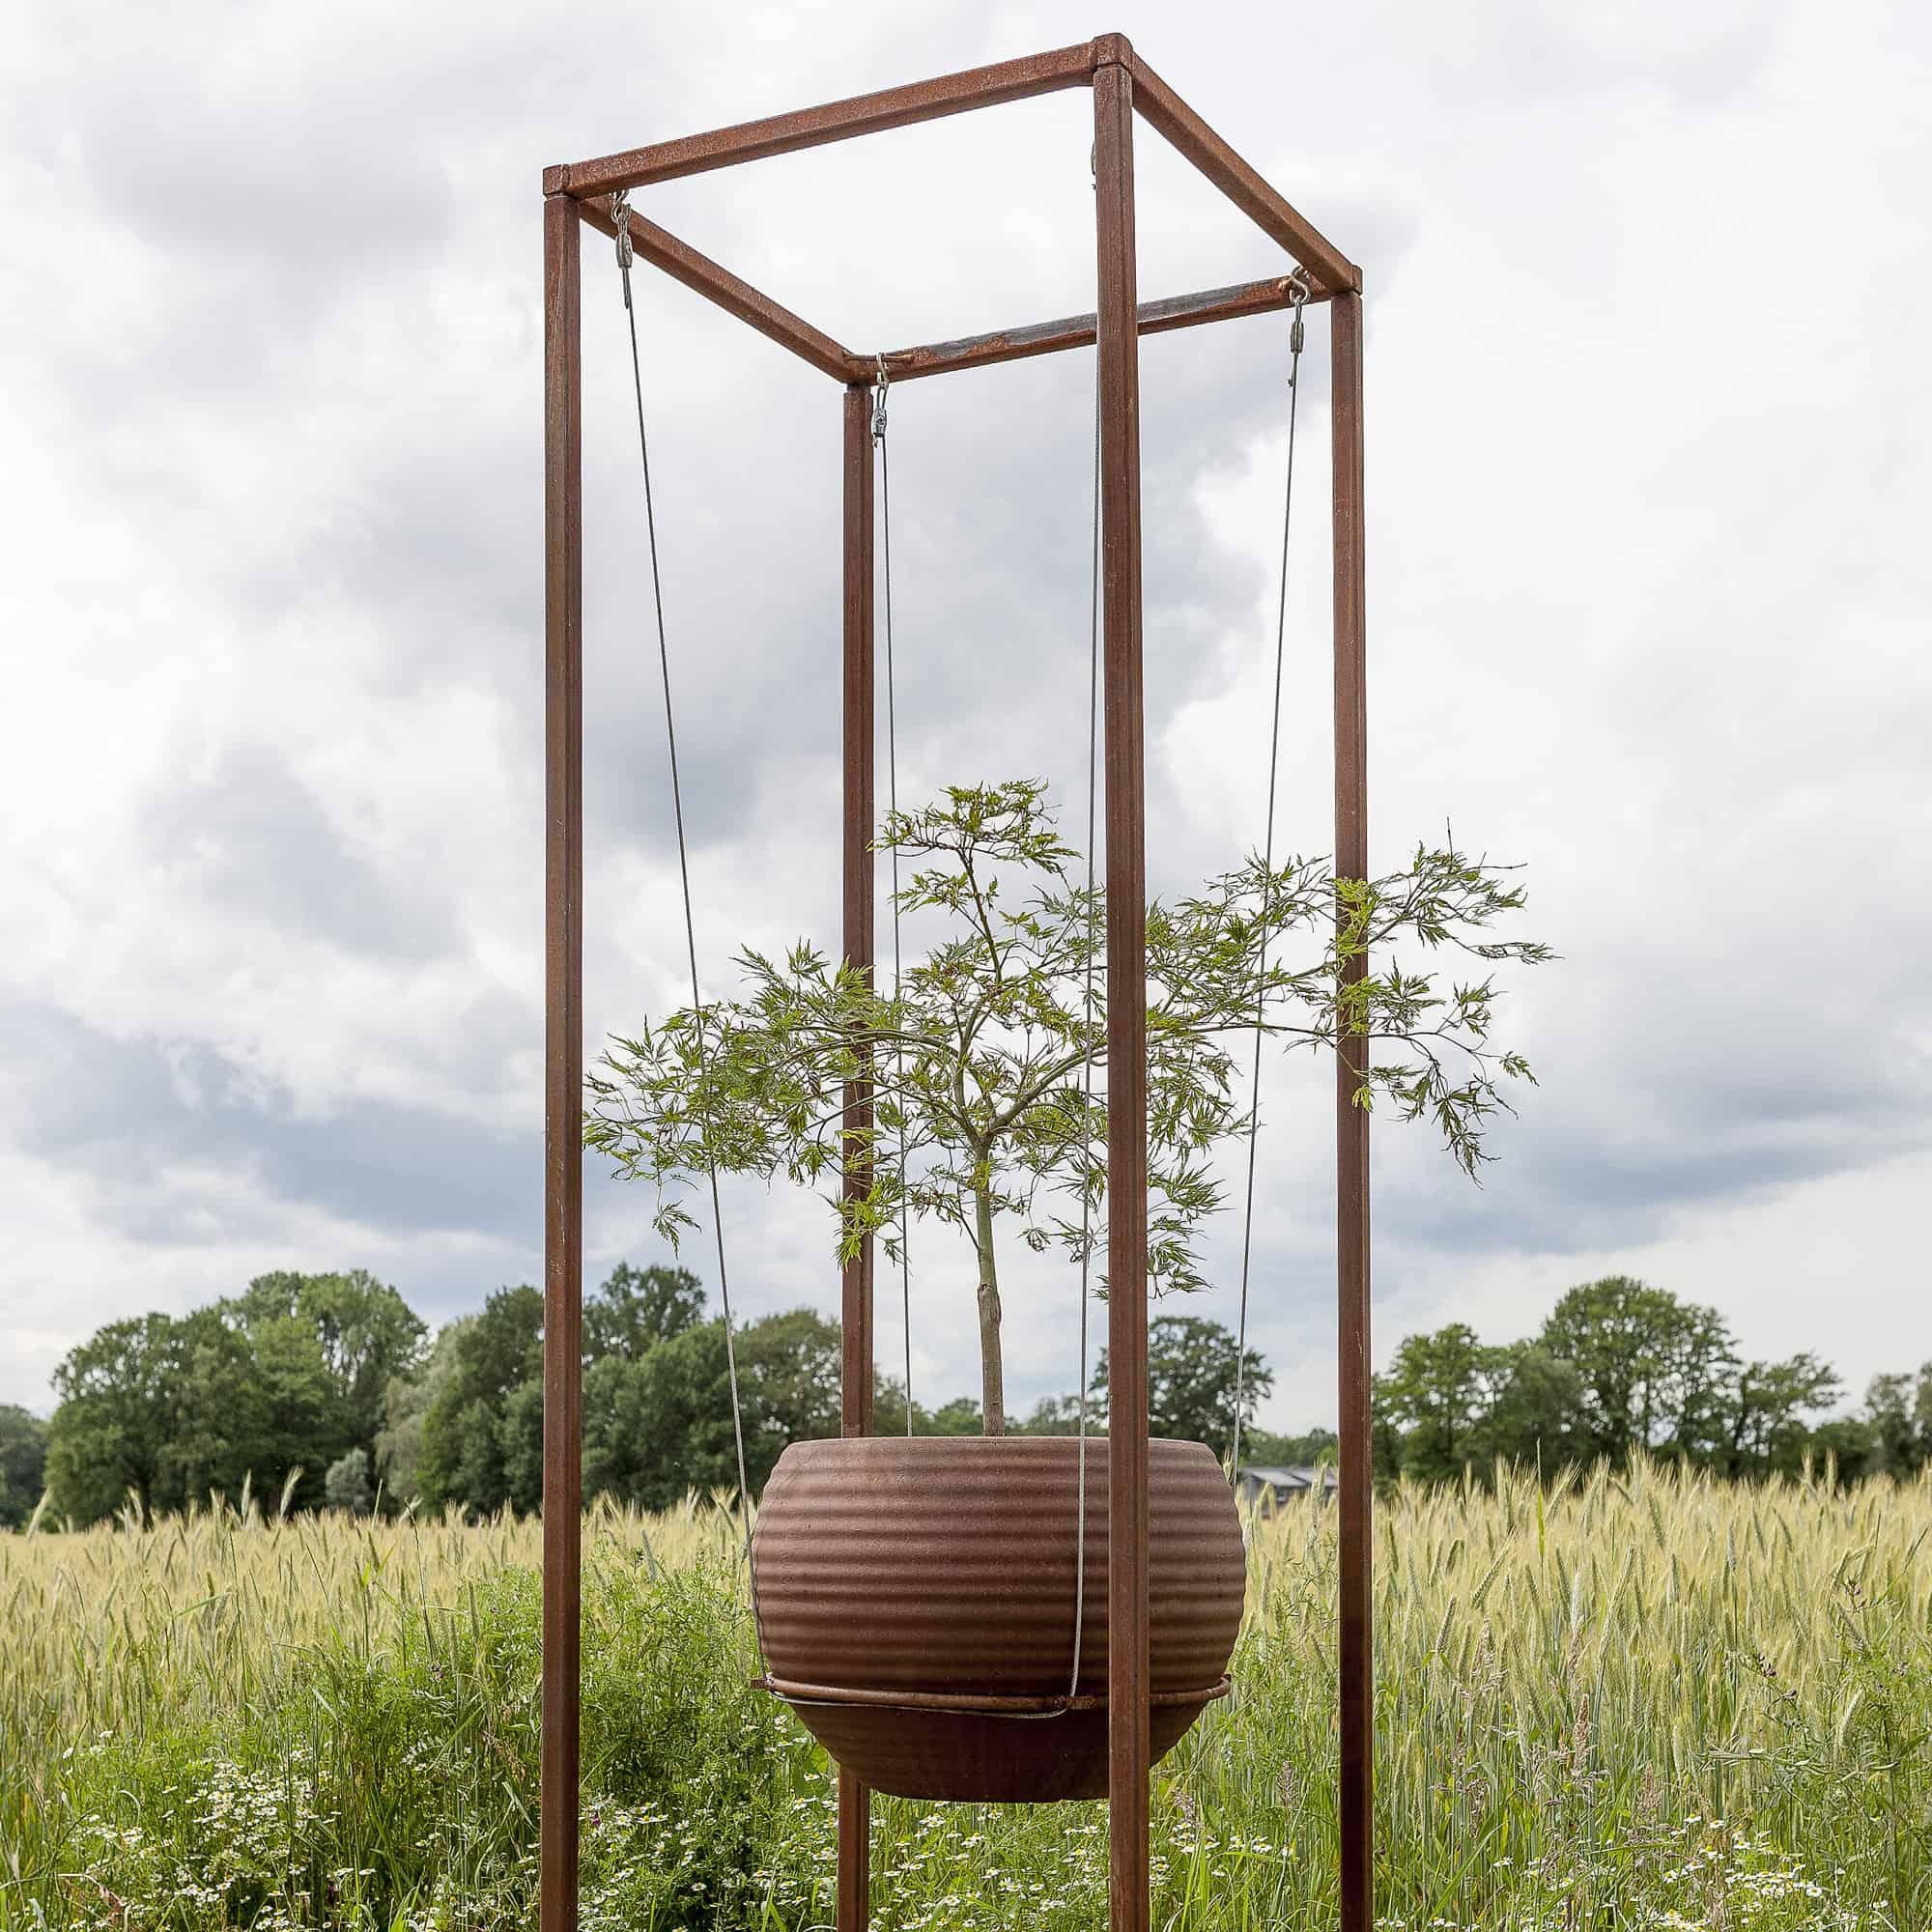 Outdoor Cuboid for floating pots - Cuboid Small - Unique Garden Ornament - Sculpture by Stefan Traloc